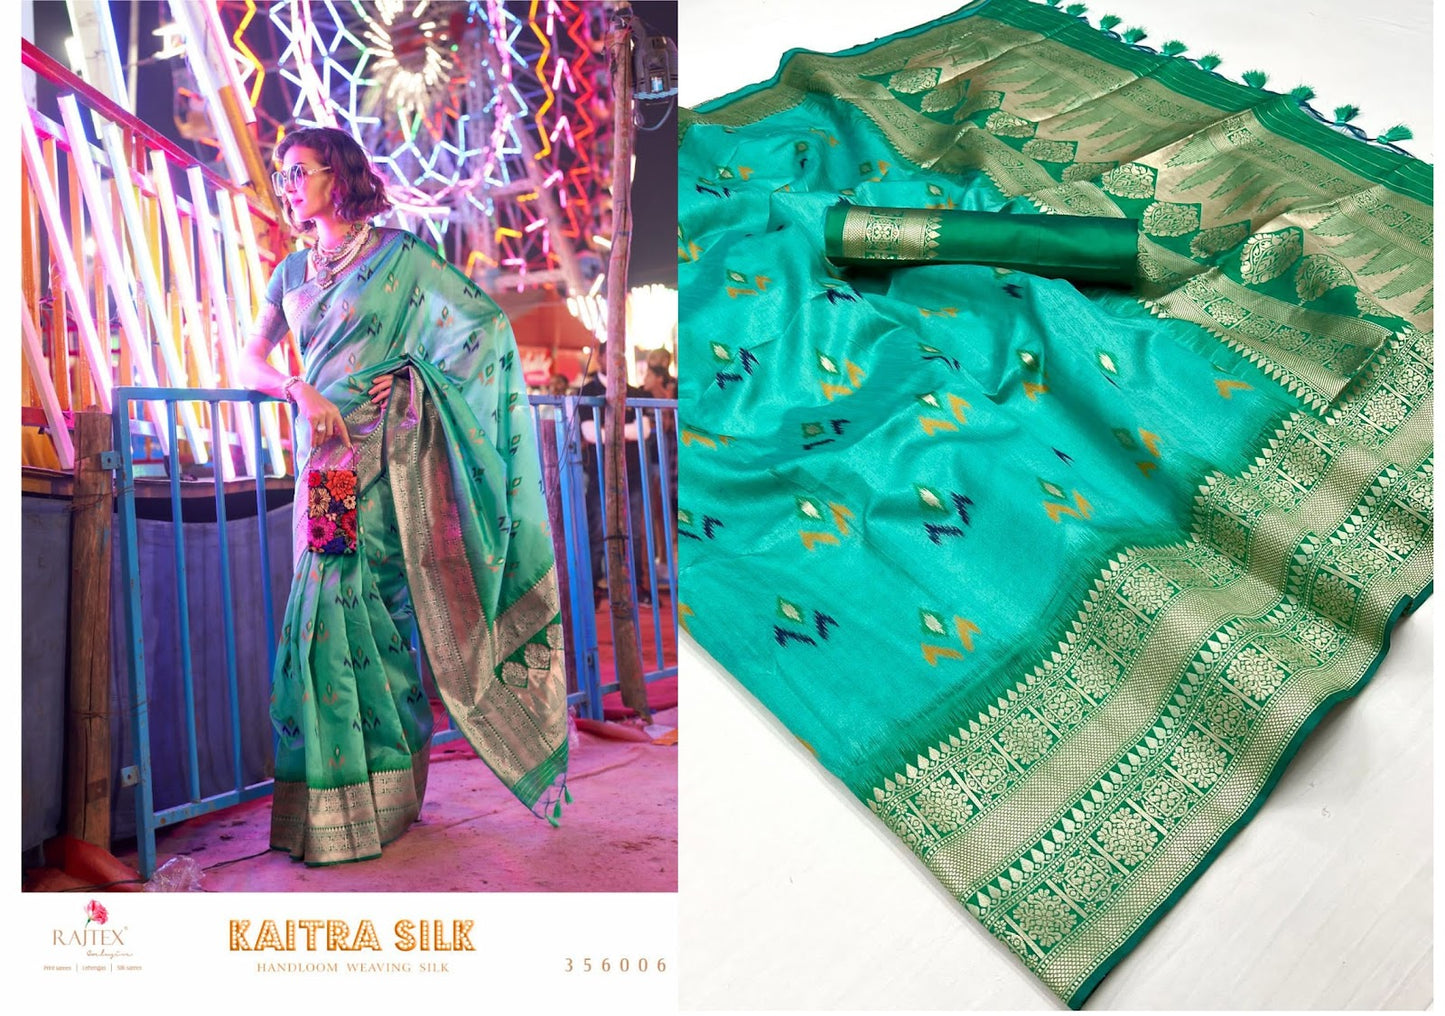 Kaitra Silk Rajtex Handloom Weaving Sarees